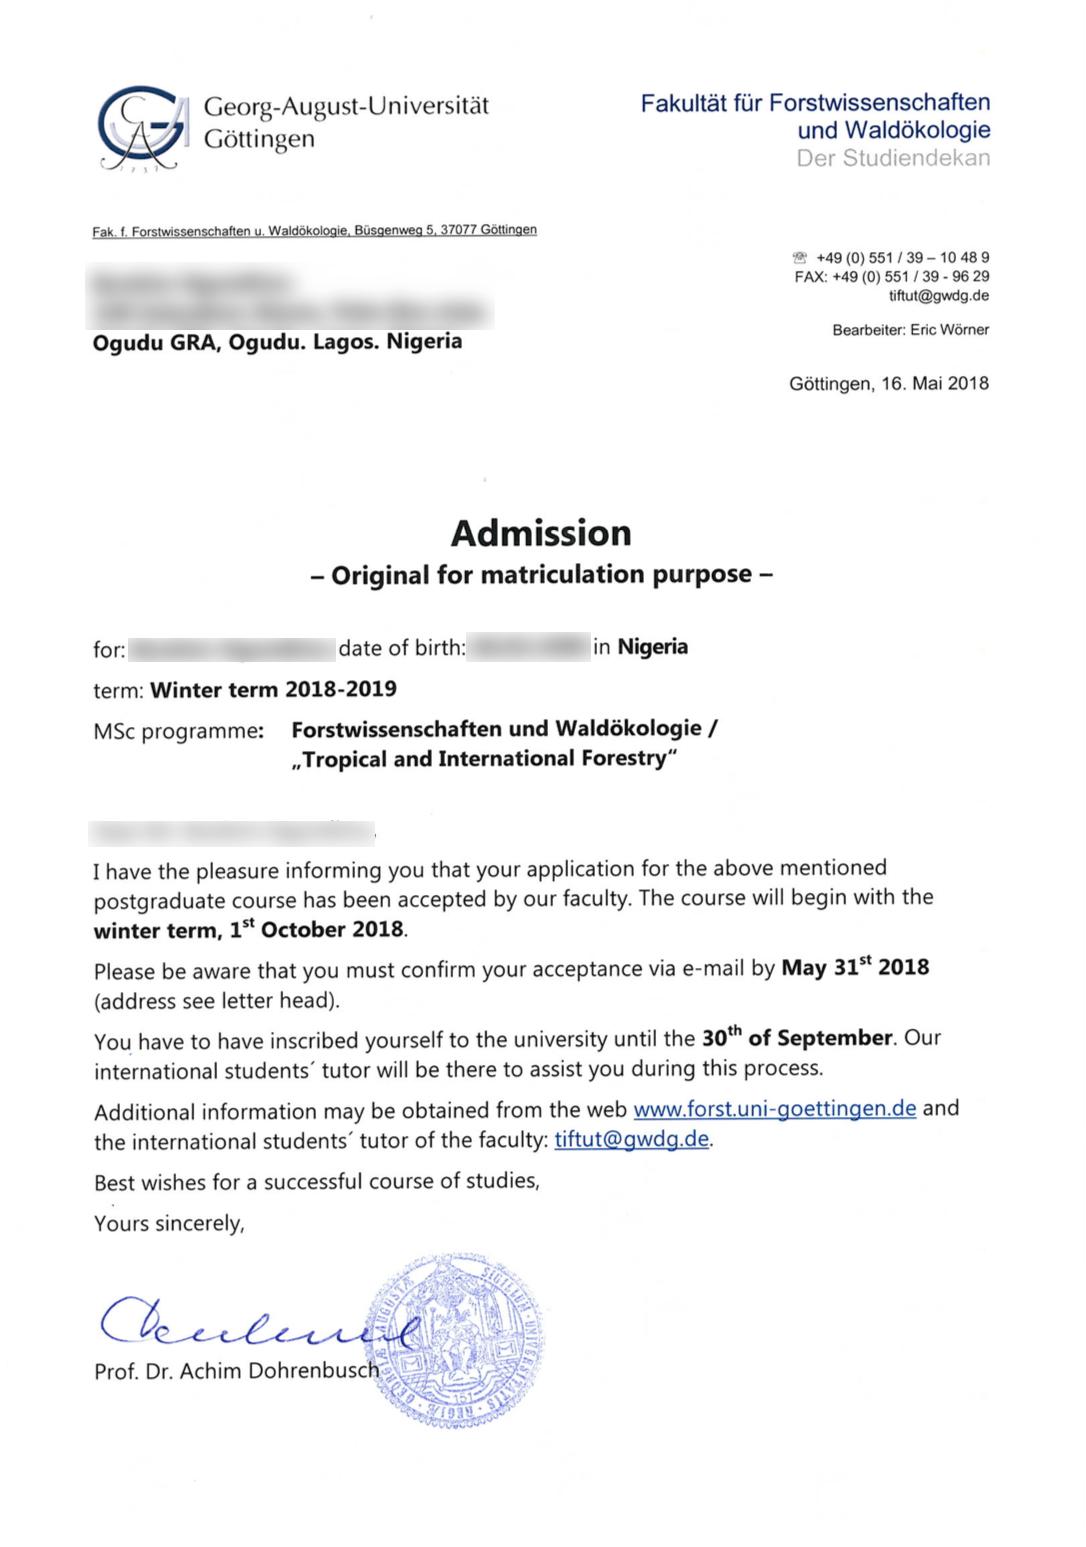 Georg August Universitat Gottingen Admission Letter